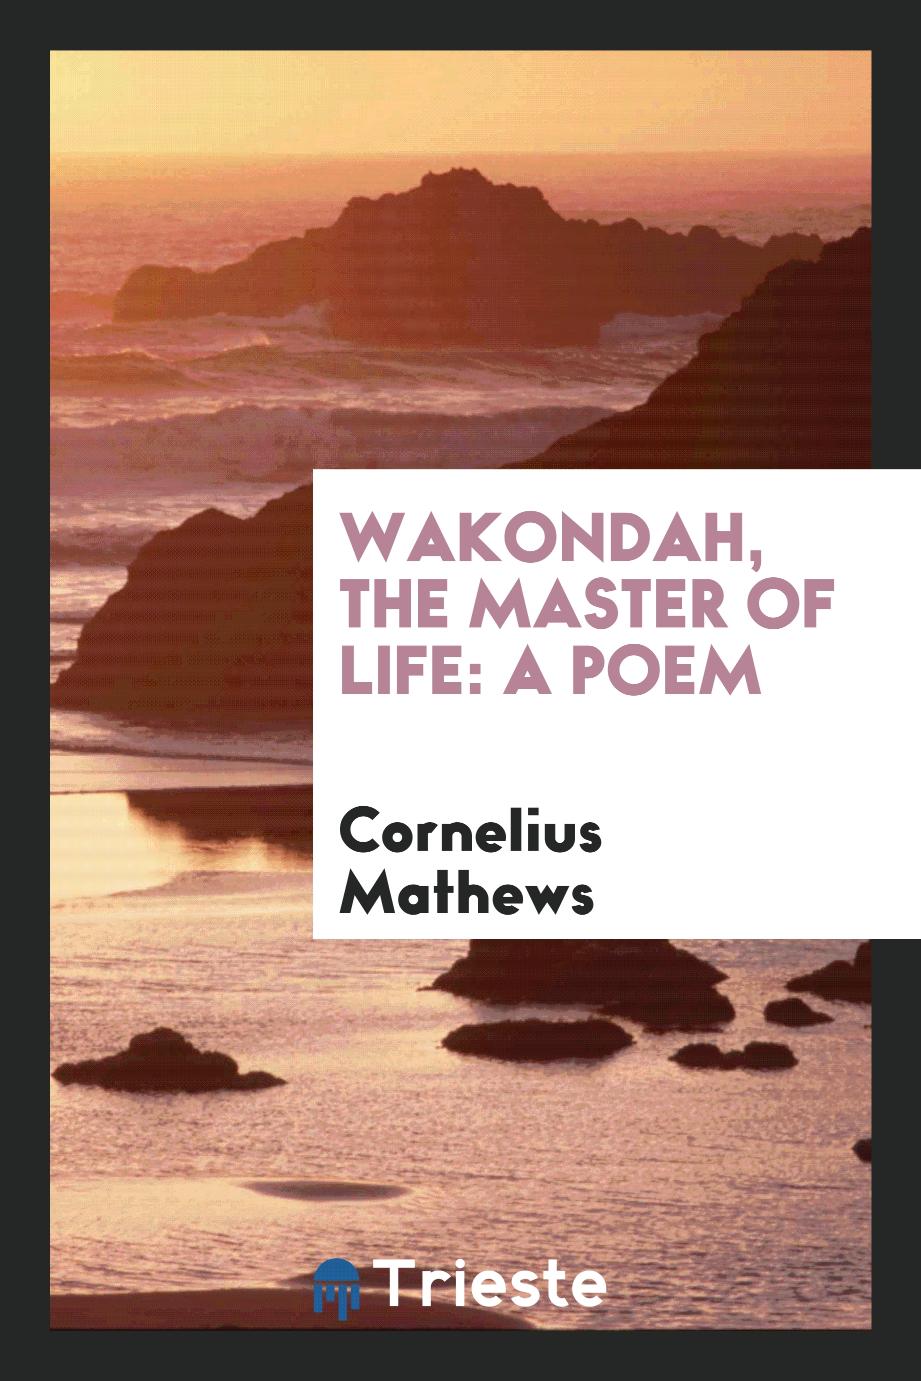 Wakondah, the Master of Life: A Poem